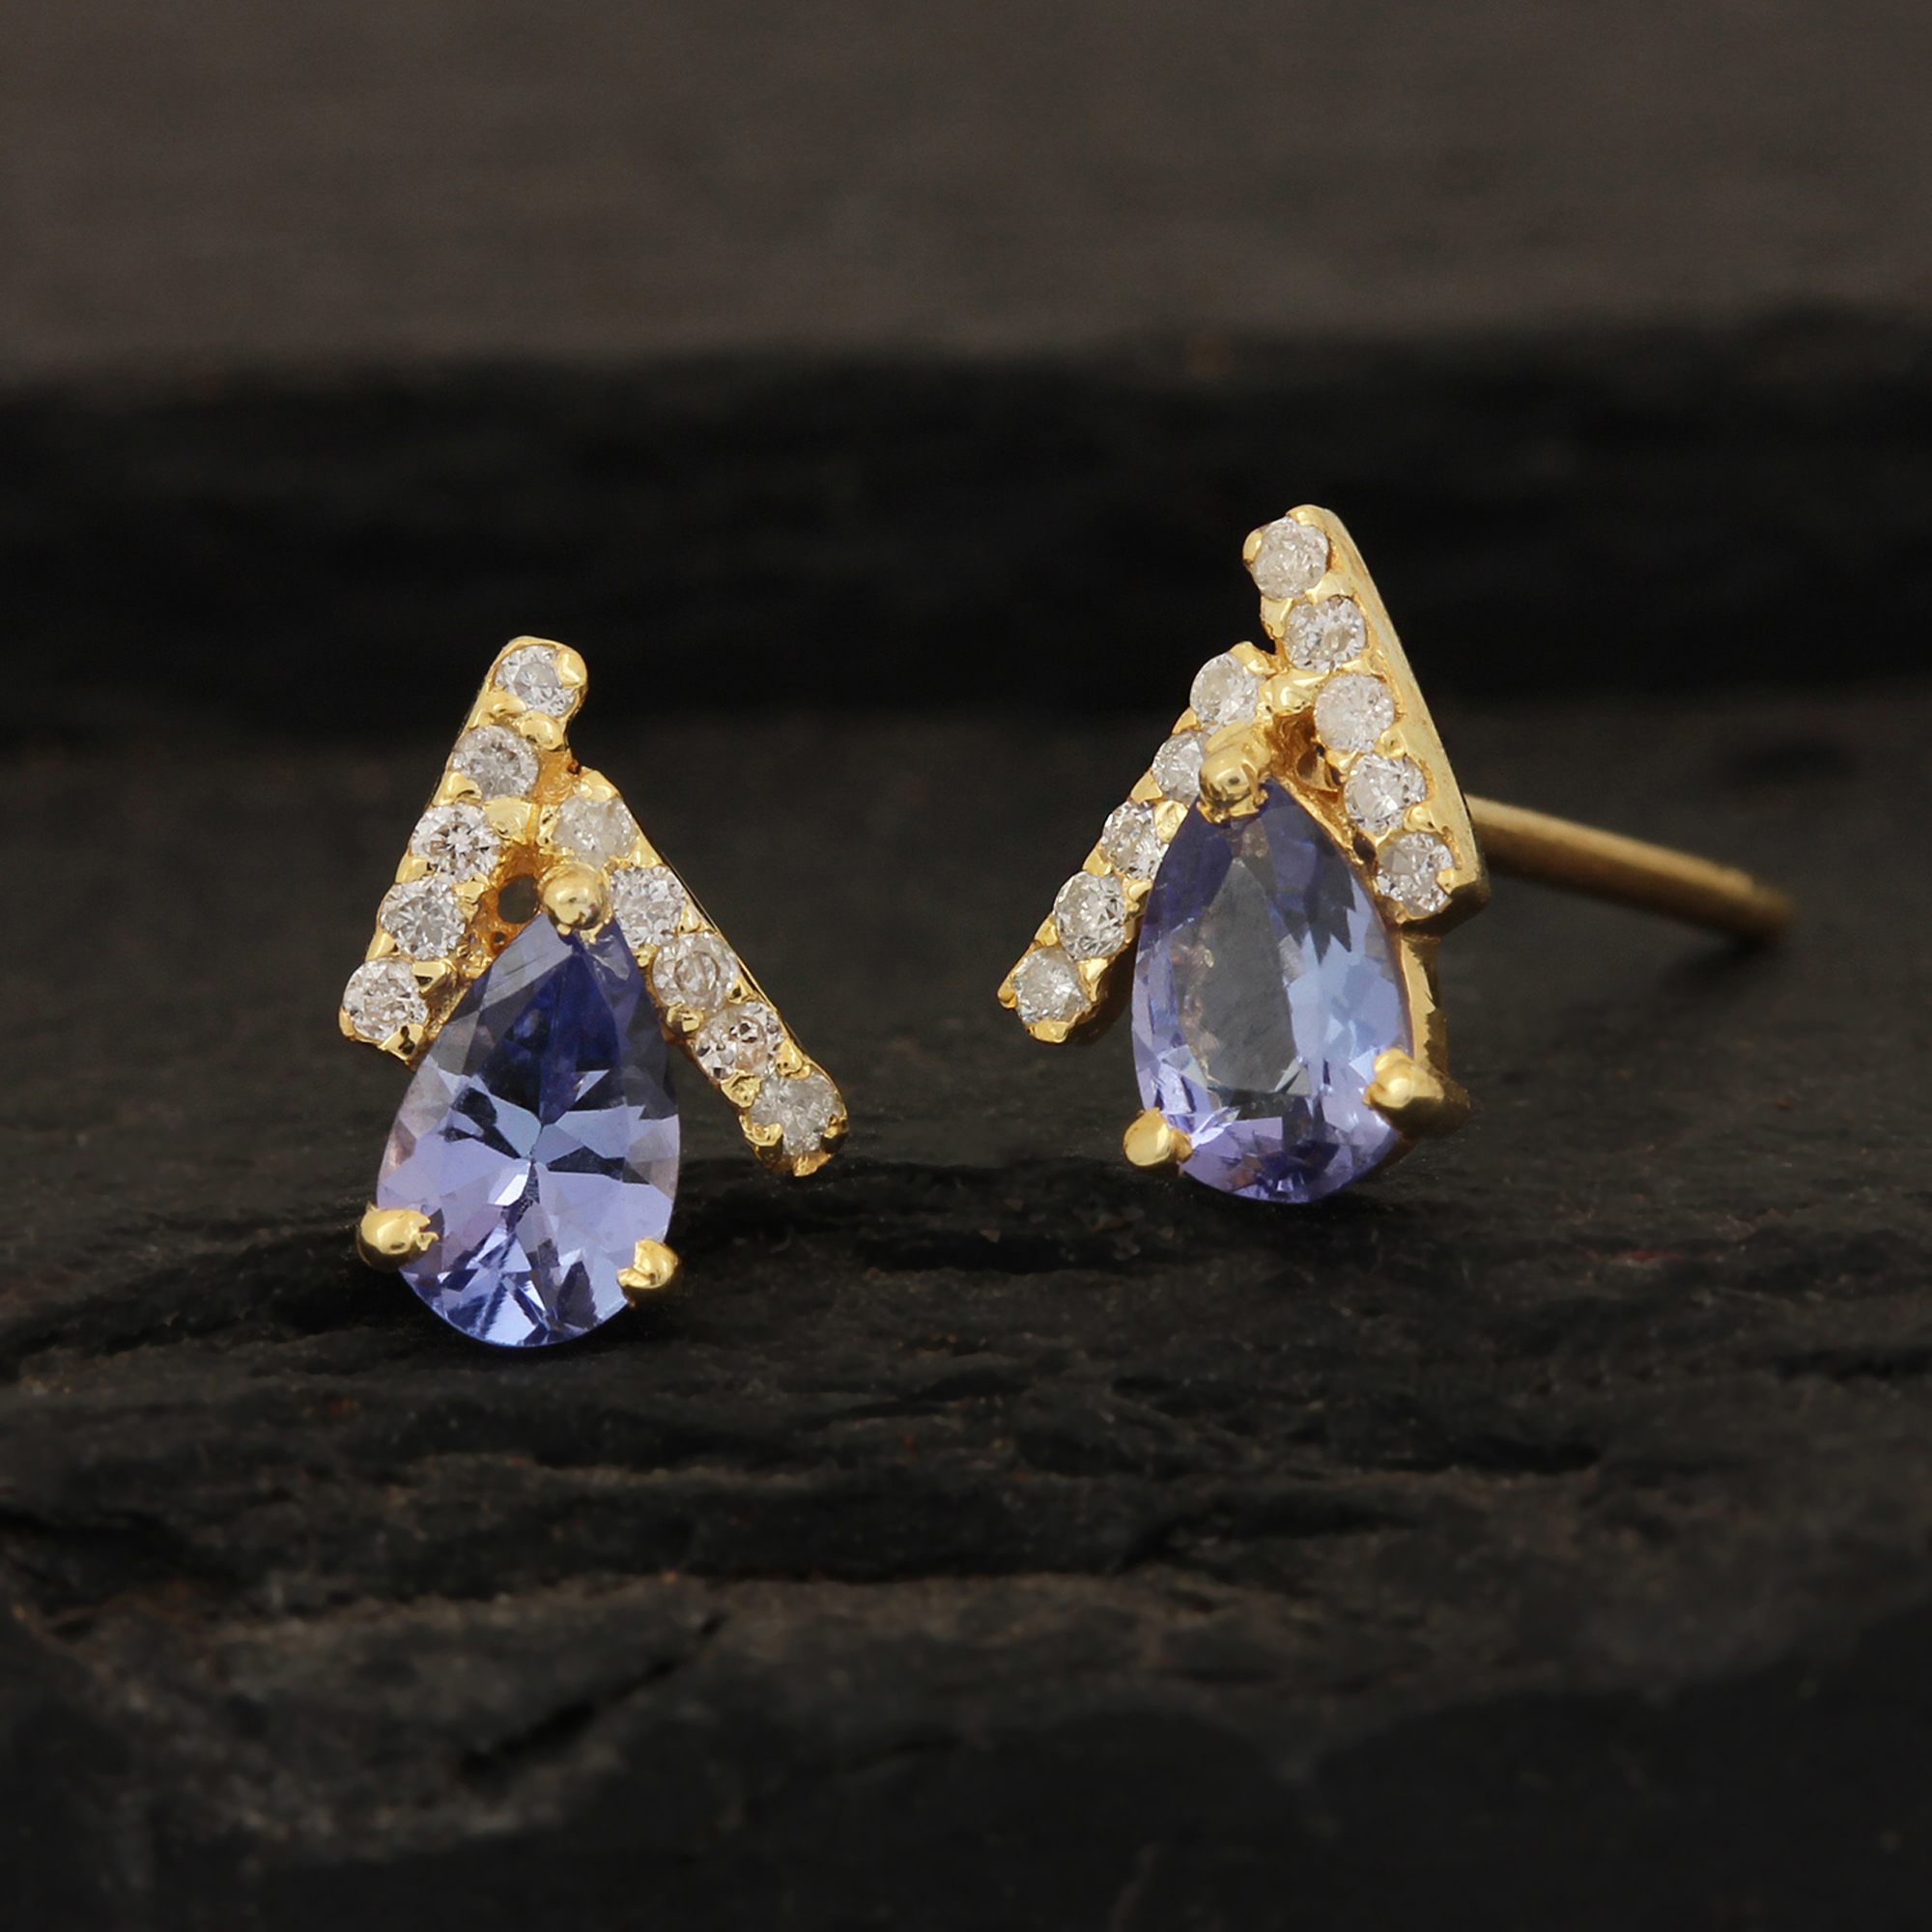 Solid 14k Gold Minimalist Stud Earrings Adorned With Diamond &Tanzanite